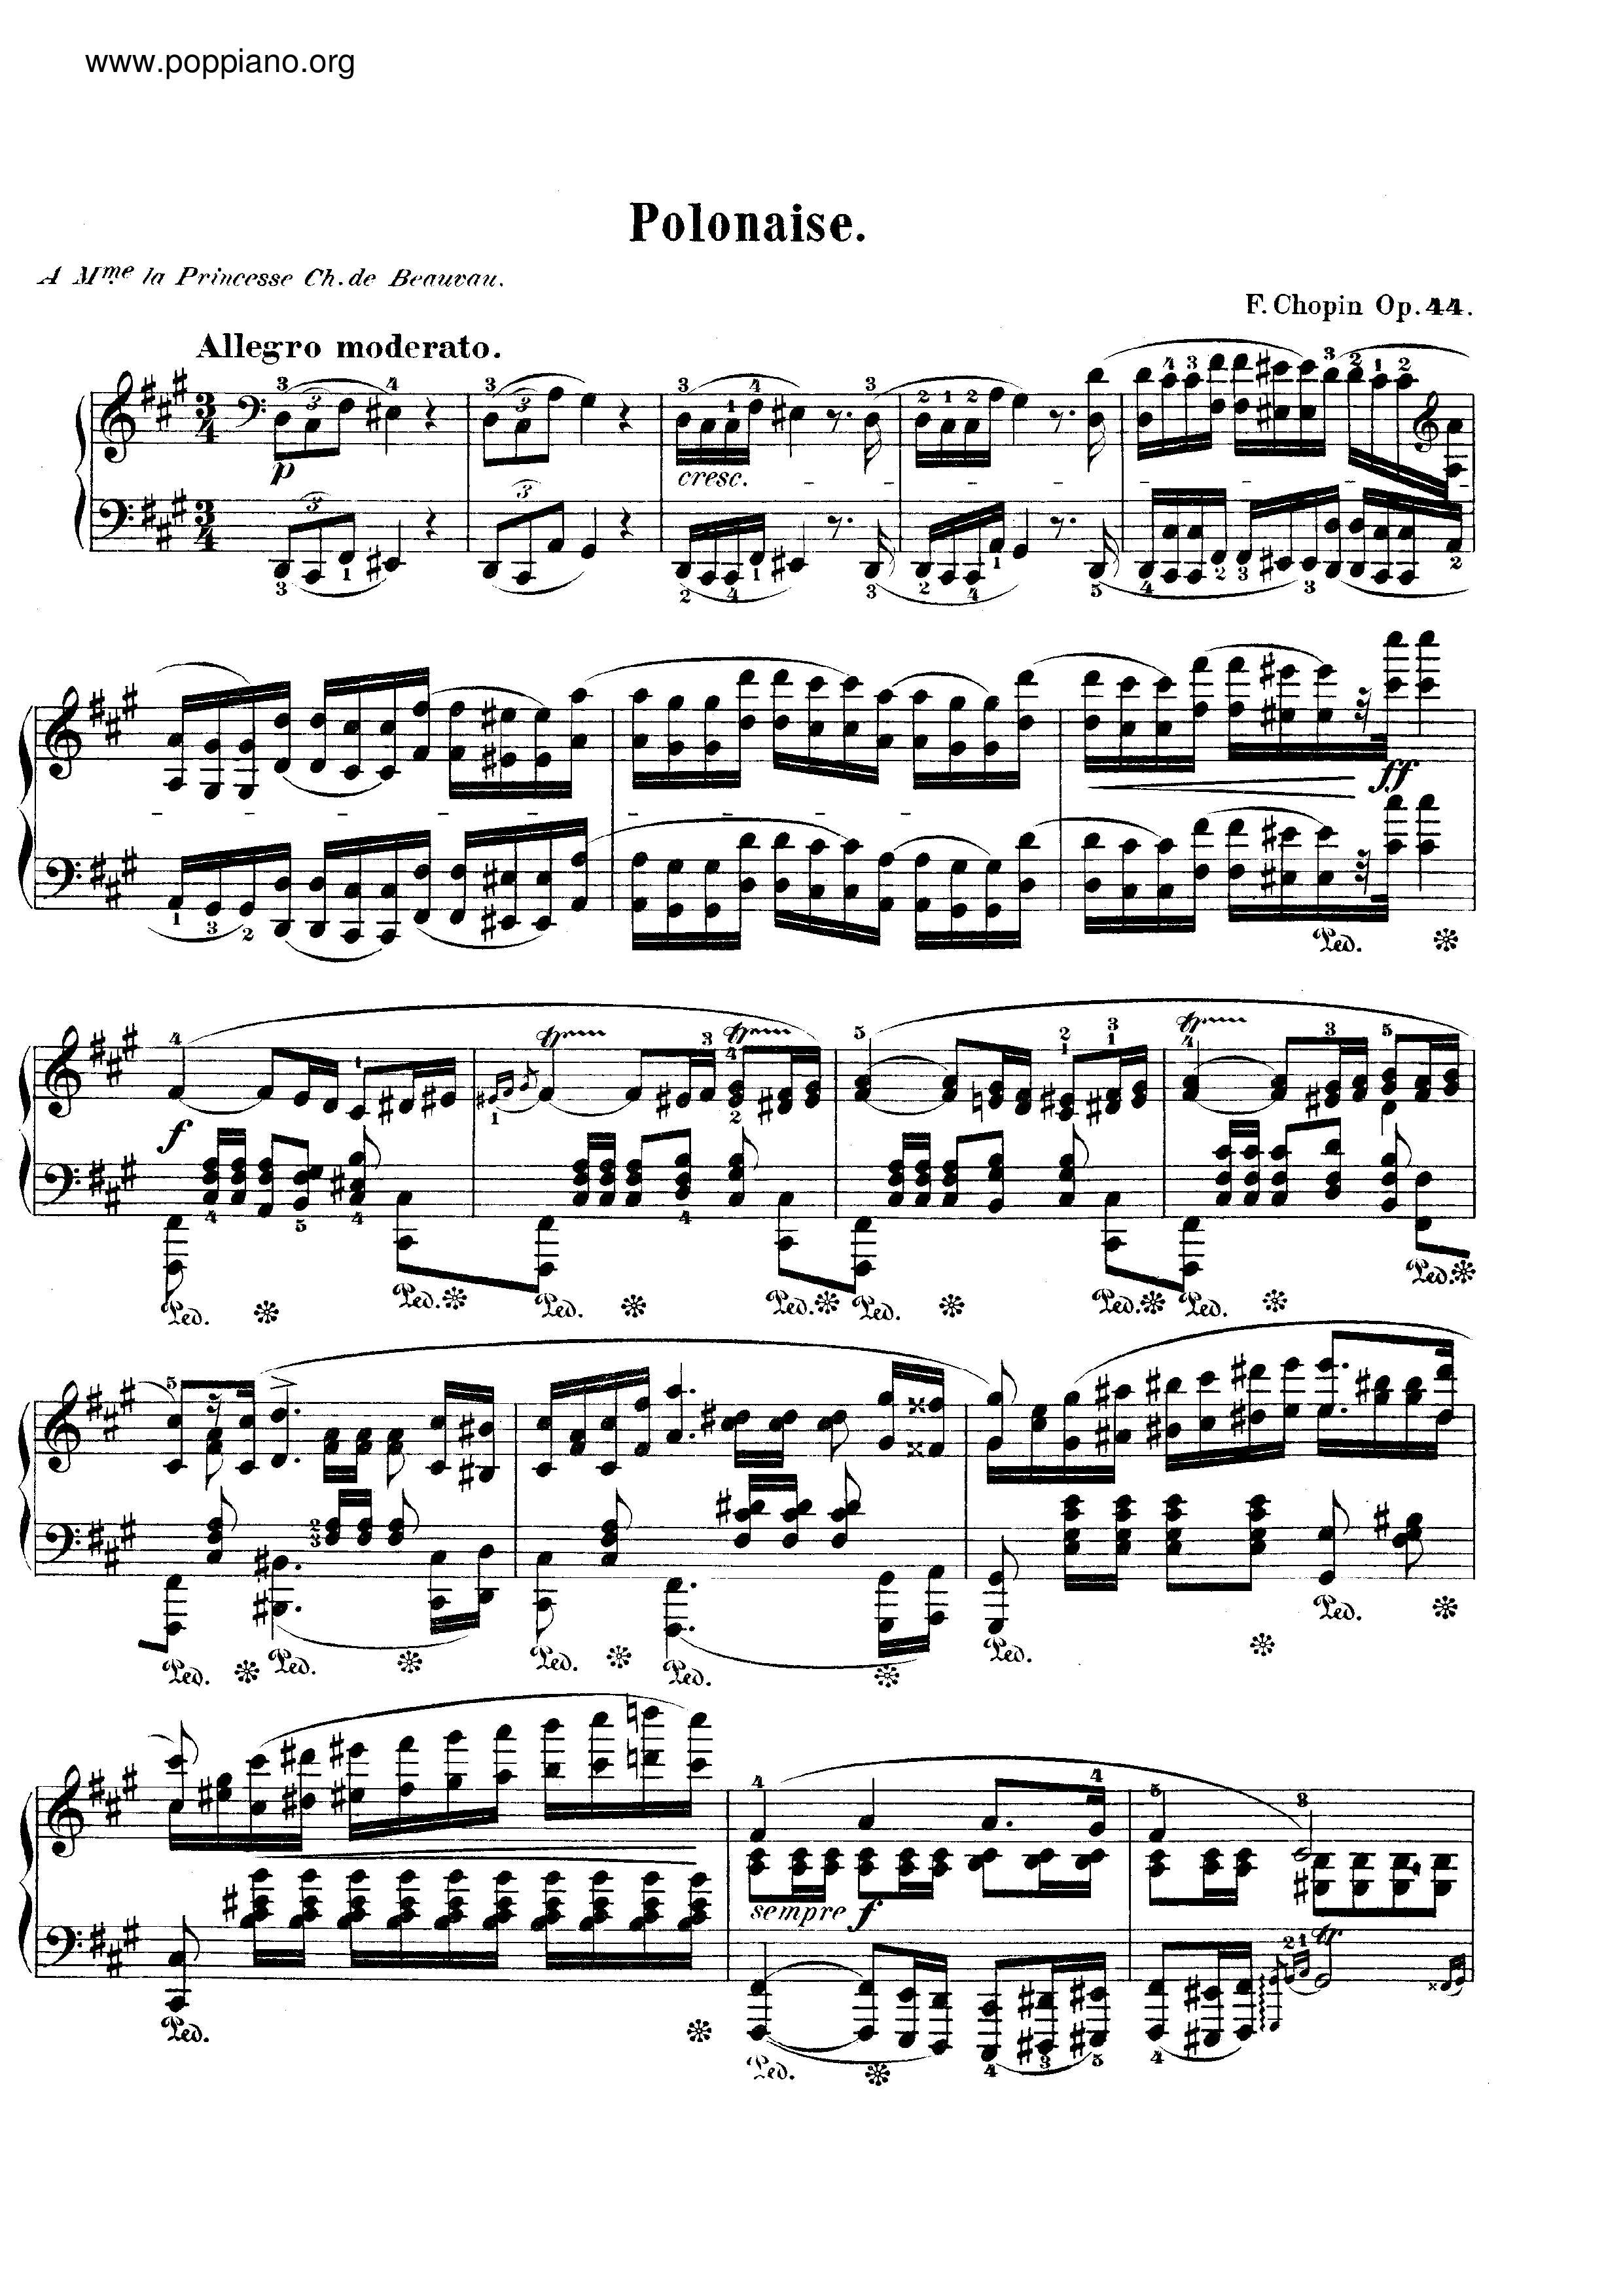 Polonaise in f sharp minor, Op. 44ピアノ譜